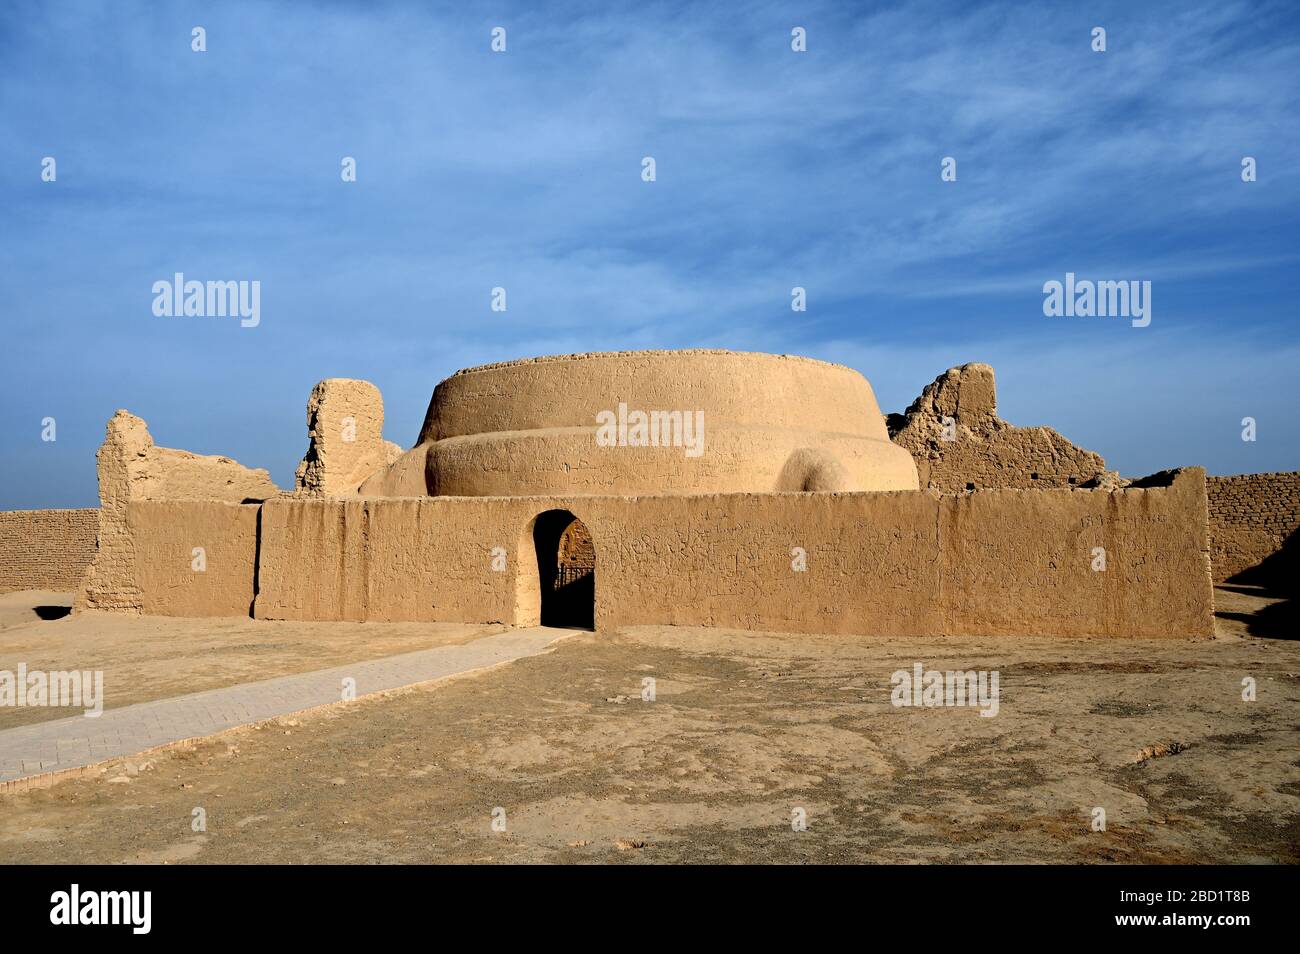 Moschee in der zerstörten alten Silk Road Oasis Stadt Gaochang, Taklamakan Wüste, Xinjiang, China, Asien Stockfoto